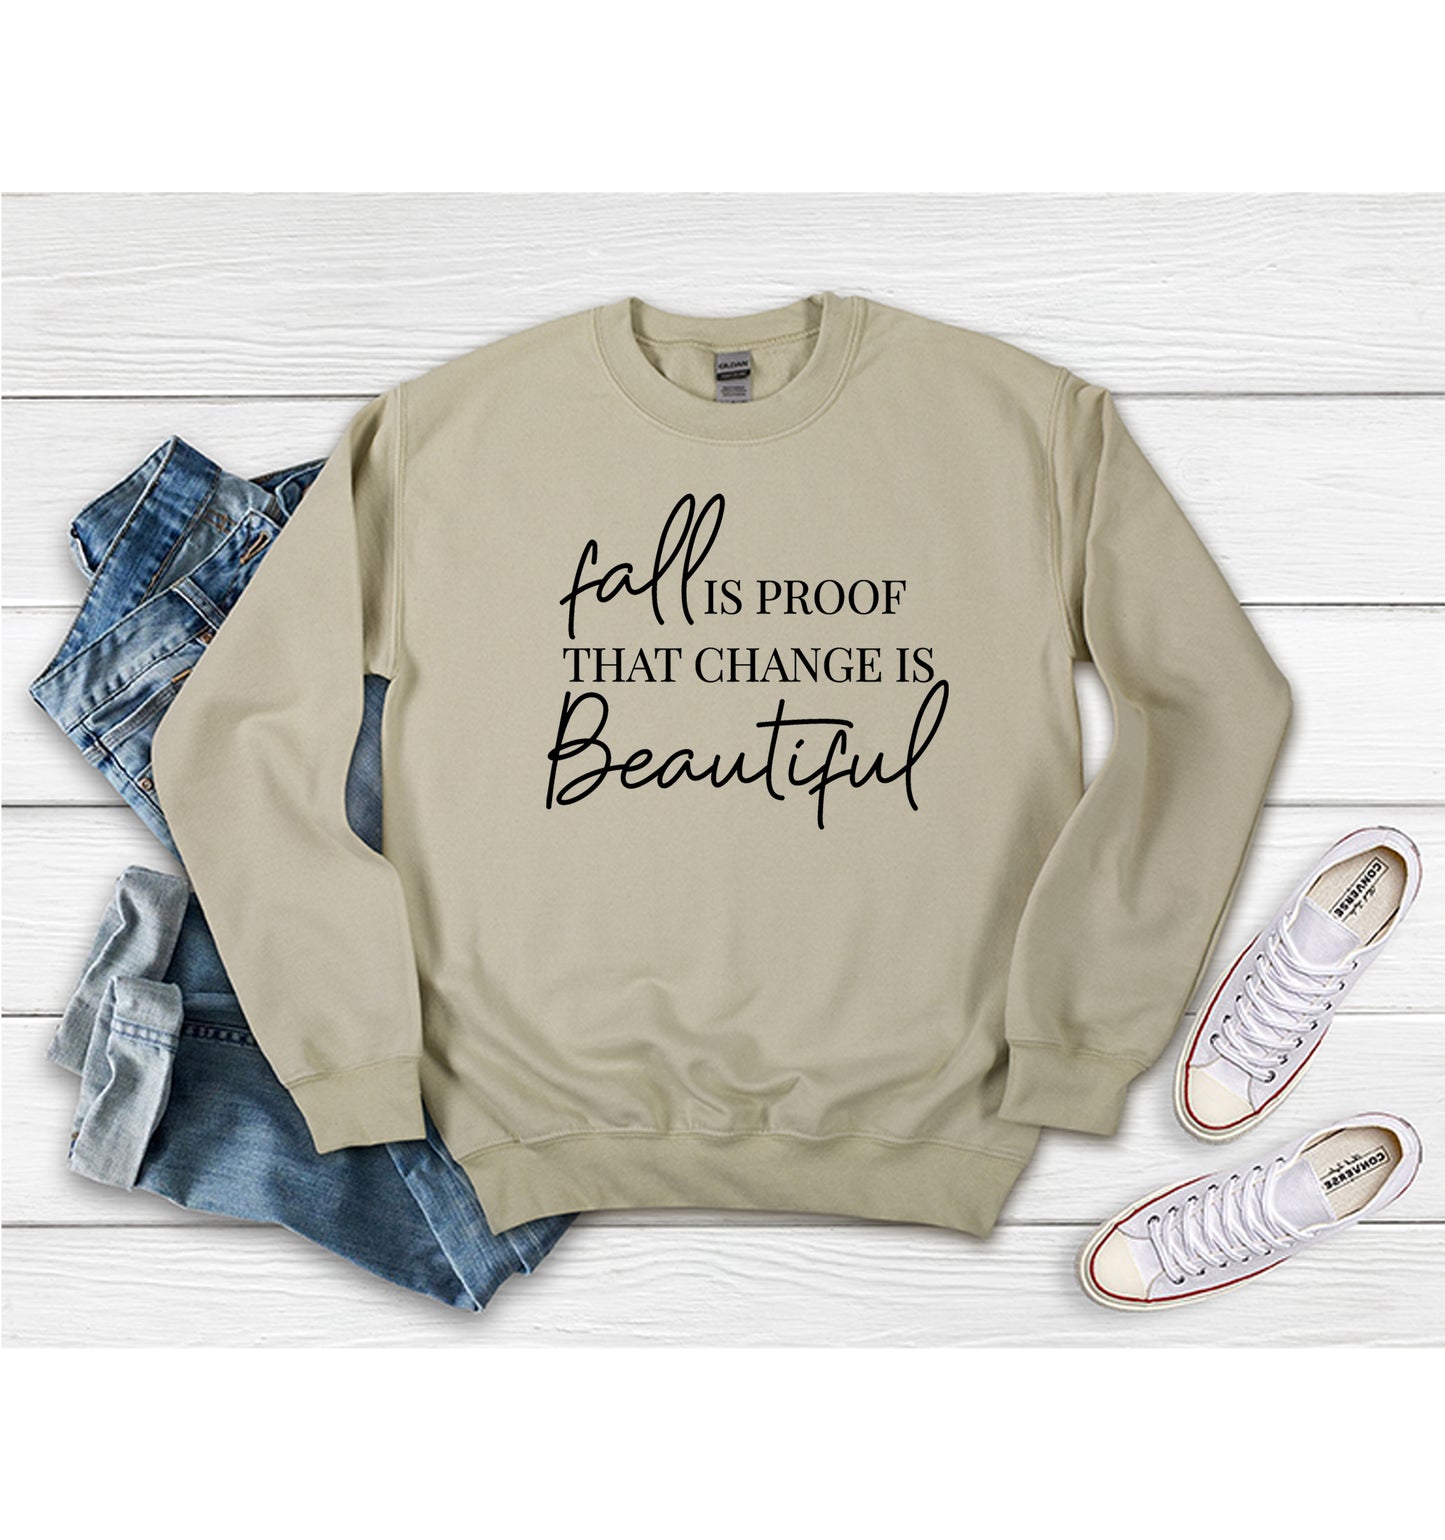 Fall is Proof that Change is Beautiful - Sweatshirt